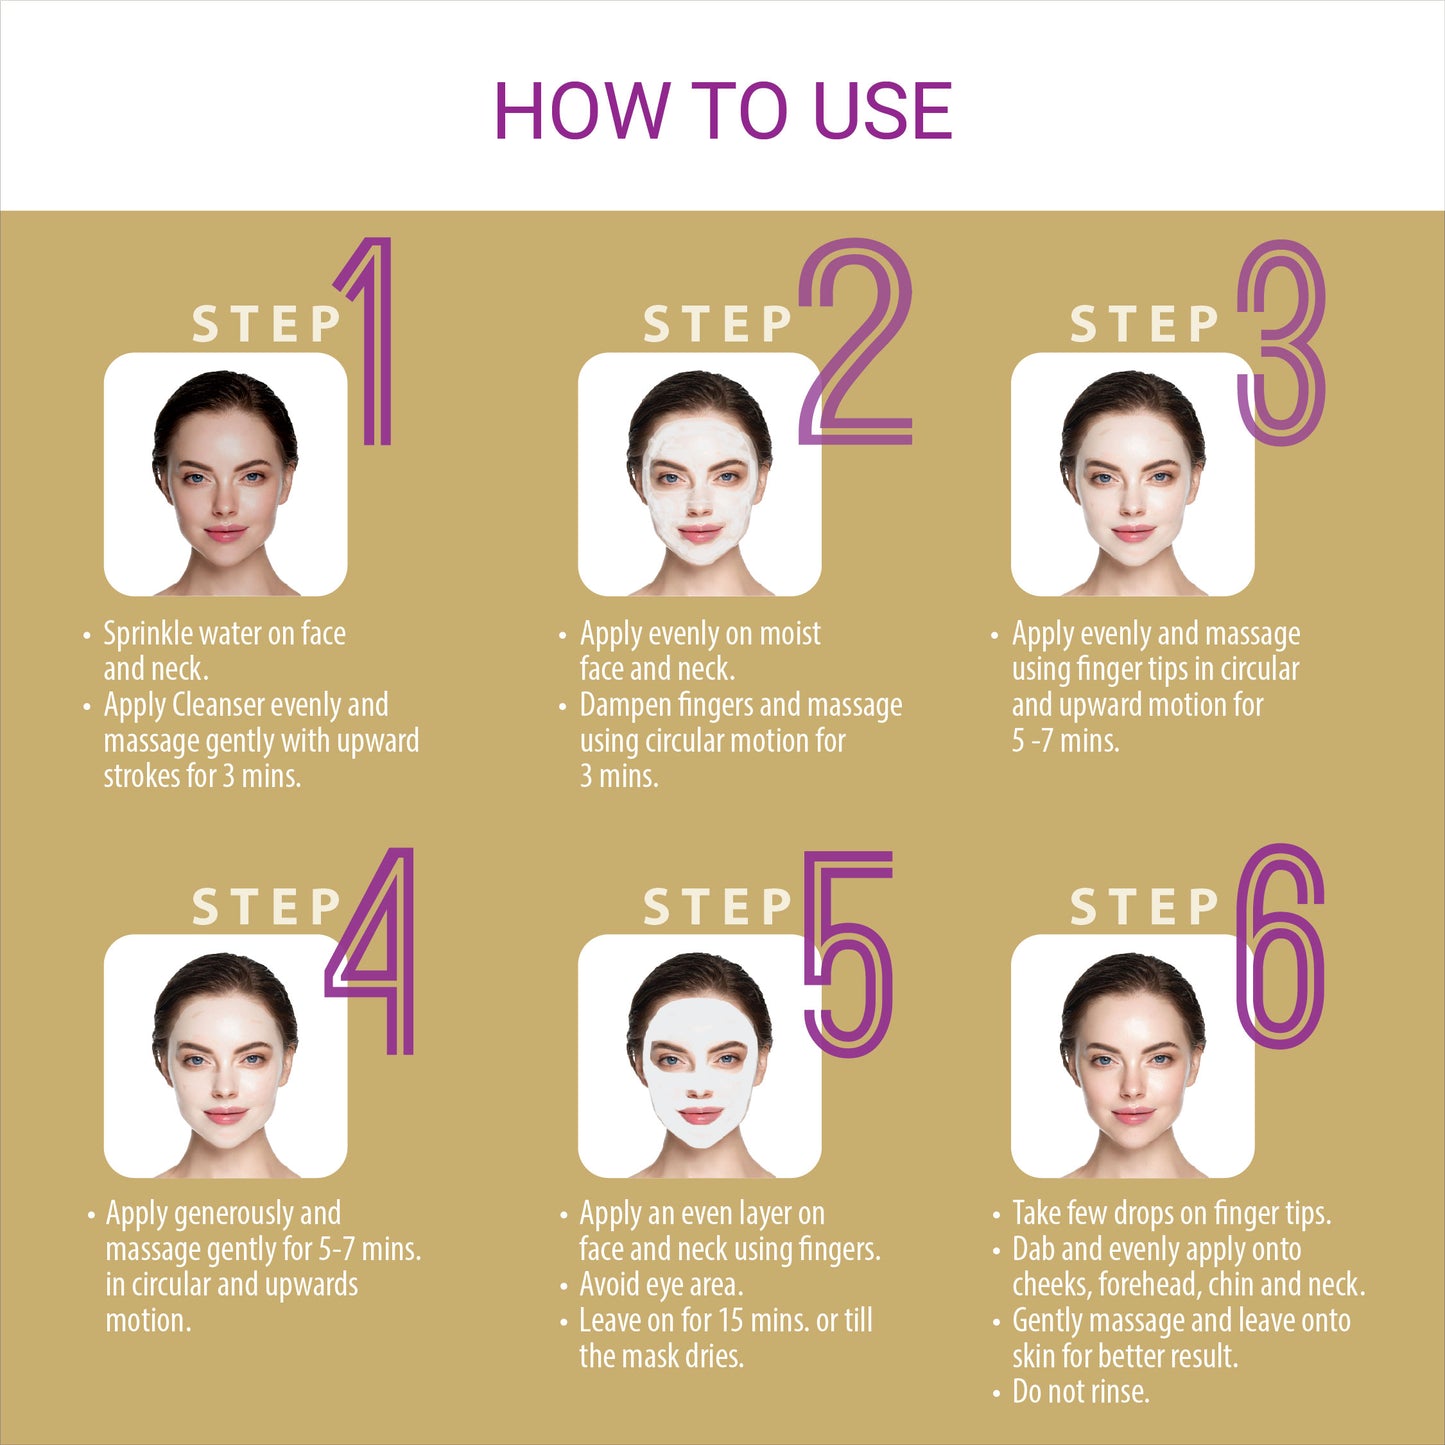 How To Use Iba Golden Glow Gold Facial Kit Description